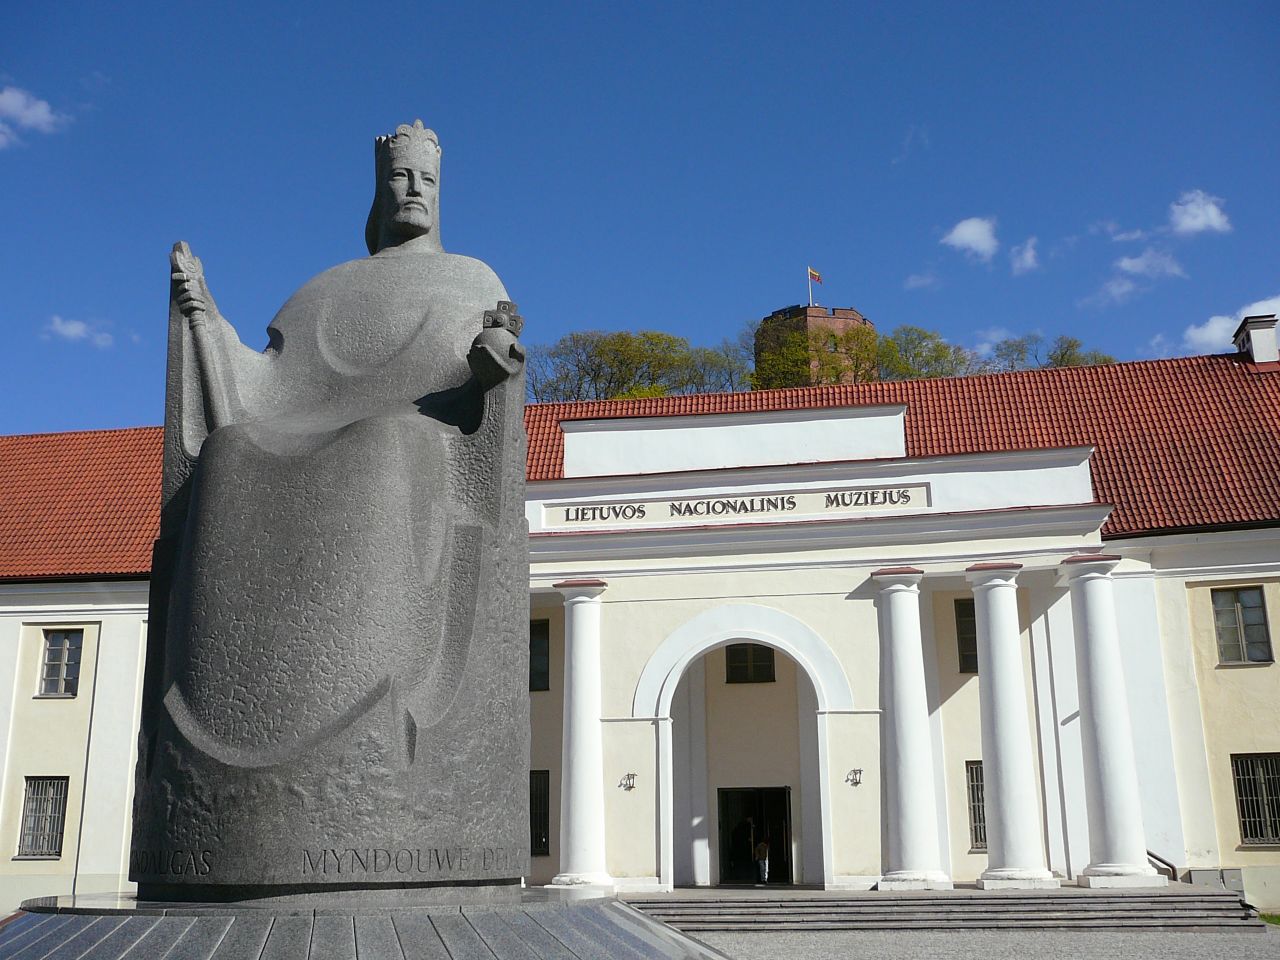 Nacionalnyj_muzej_Litvy_pamyatnik_korolyu_Mindaugasu.jpg